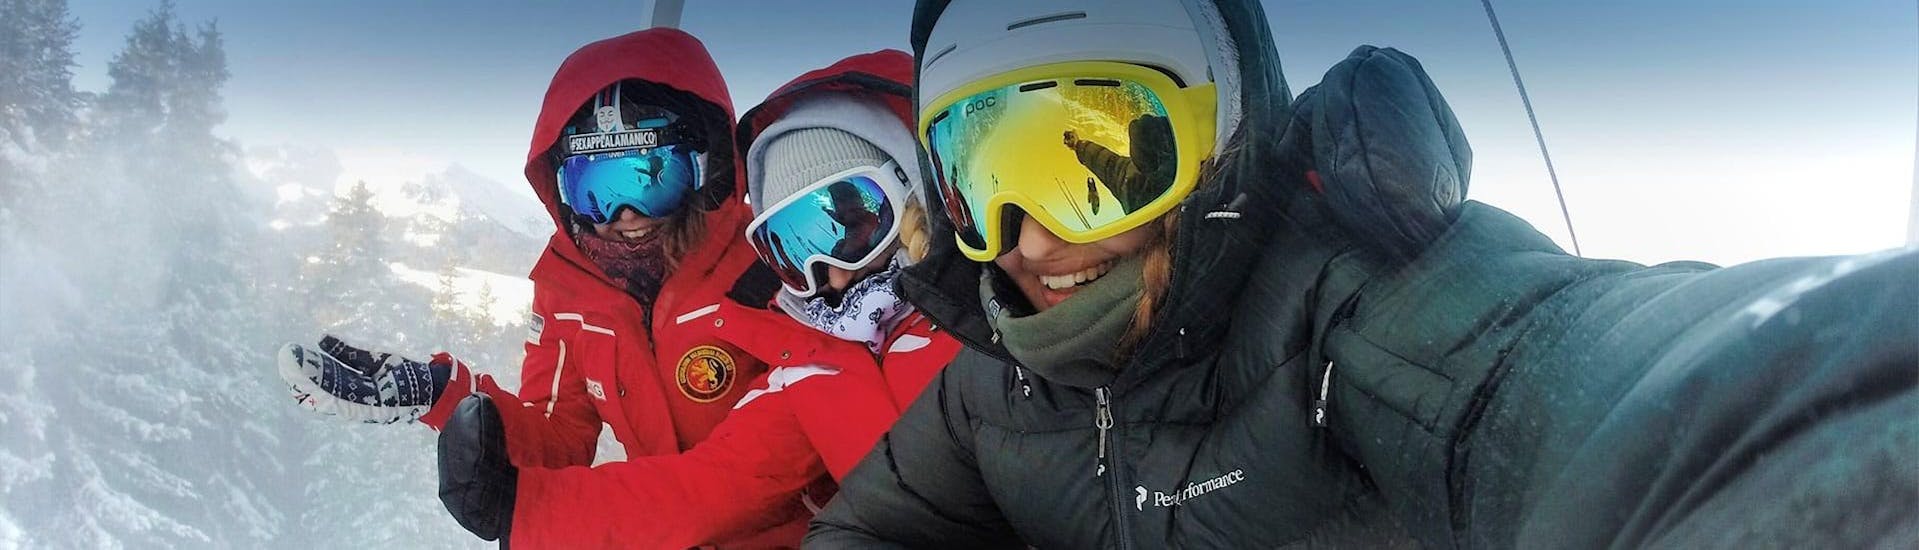 ski-lessons-for-women-ess-la-tzoumaz-hero